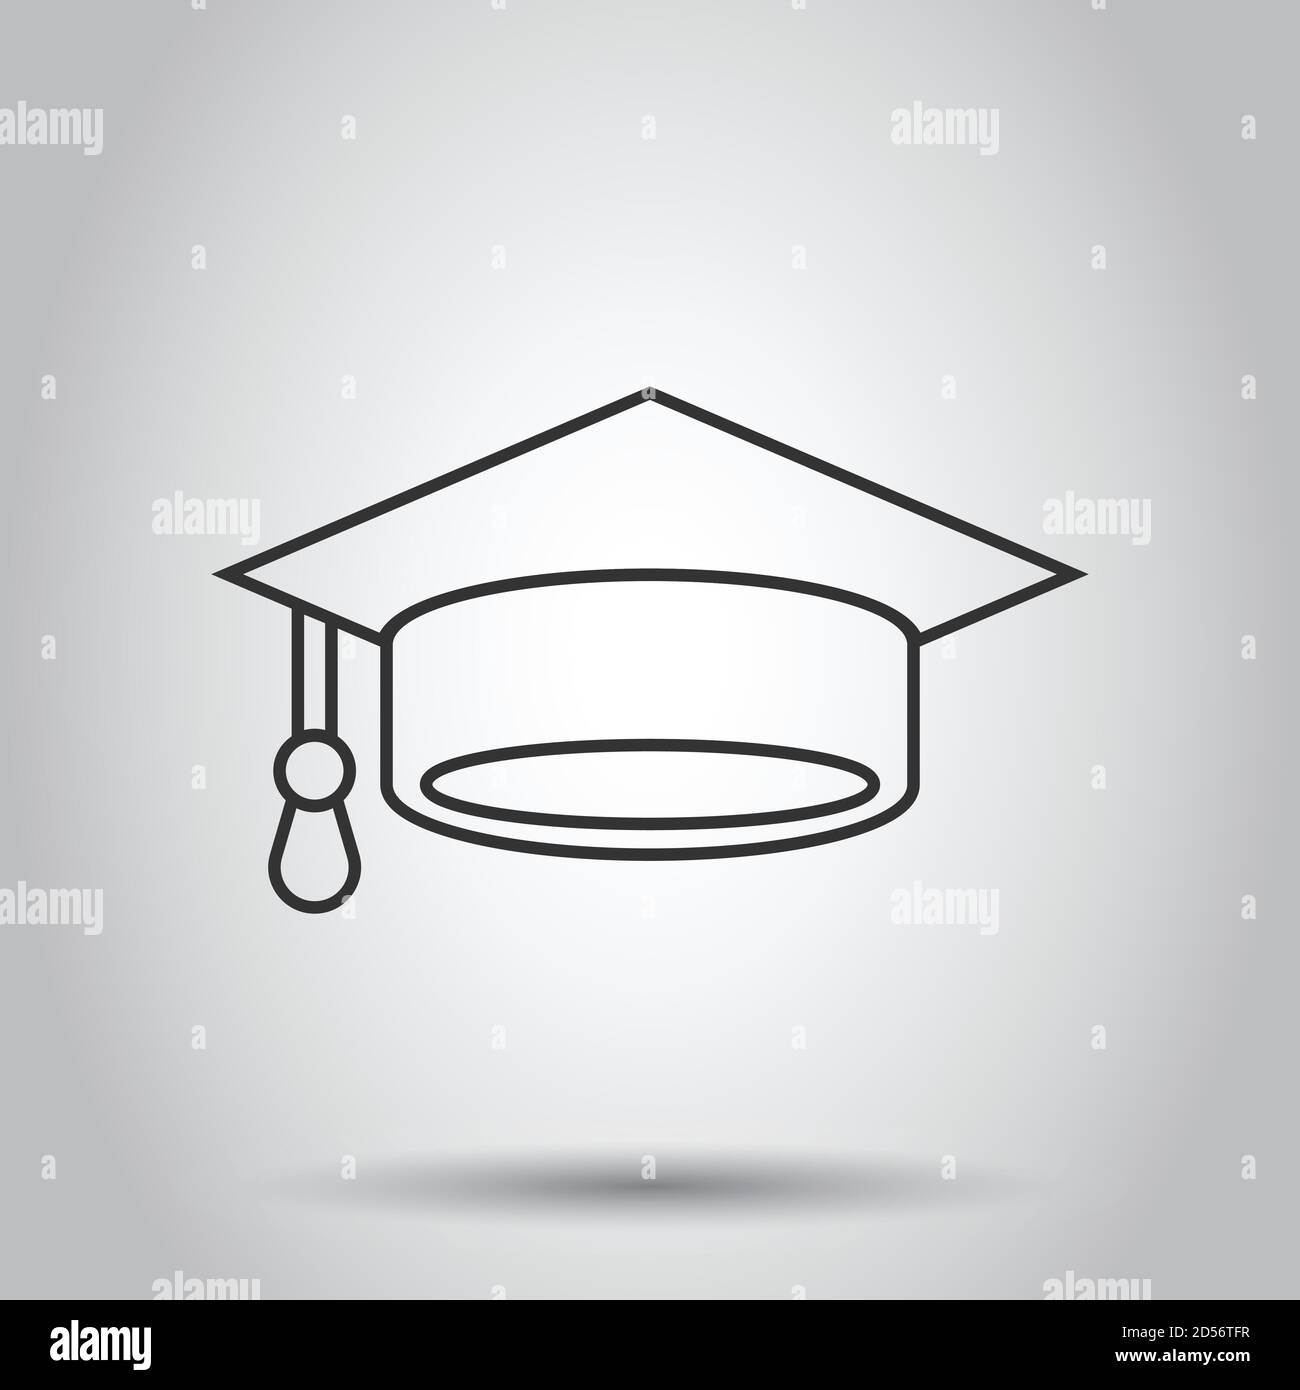 Graduation hat icon in flat style. Student cap vector illustration